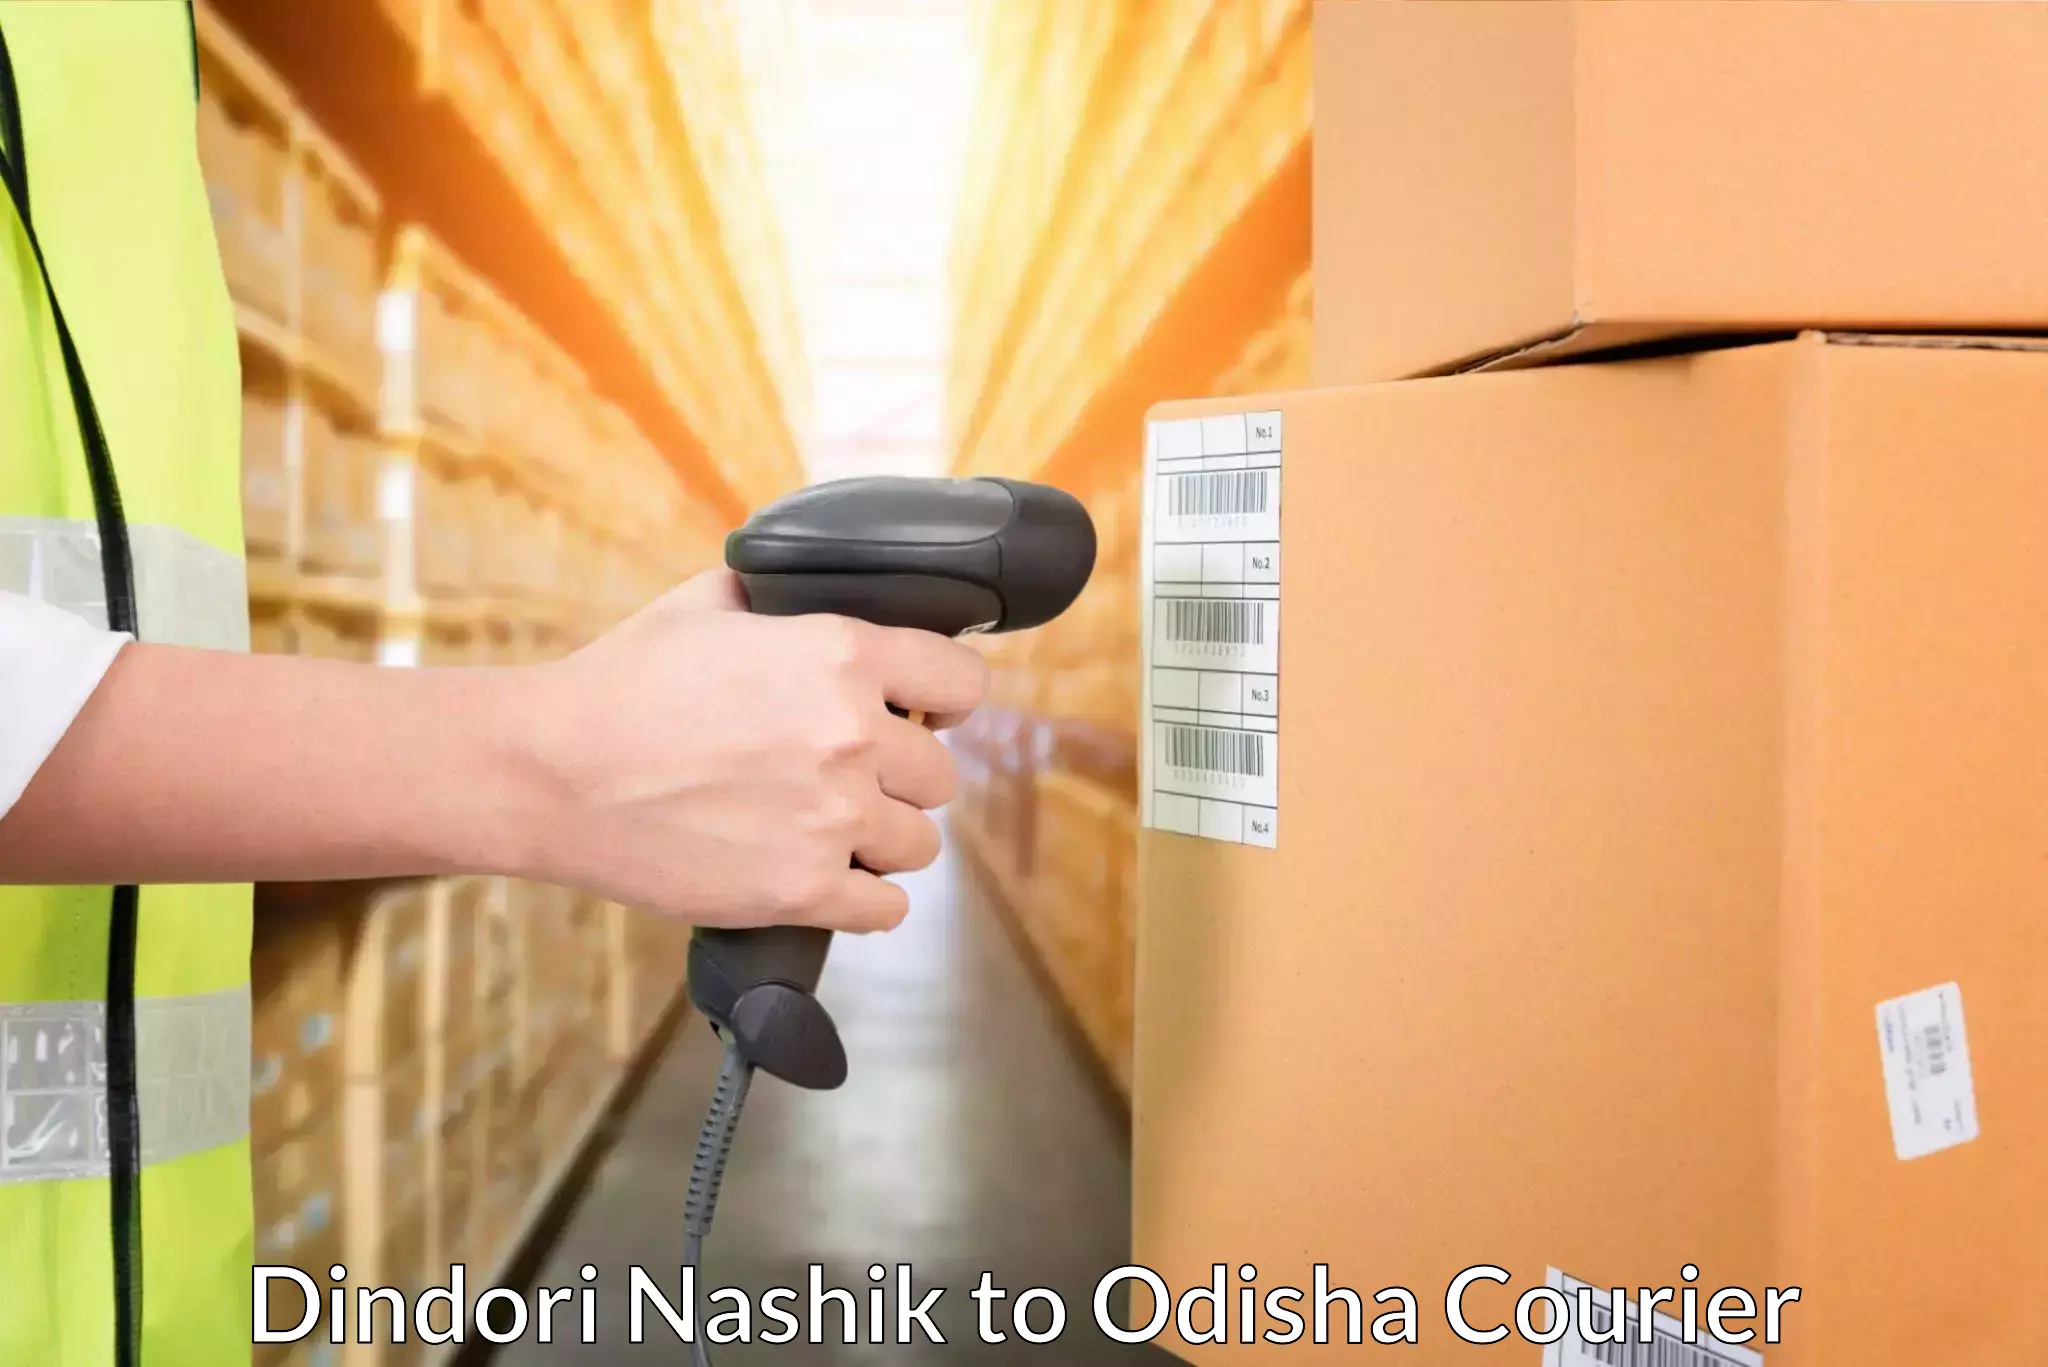 Advanced shipping technology Dindori Nashik to Chatrapur